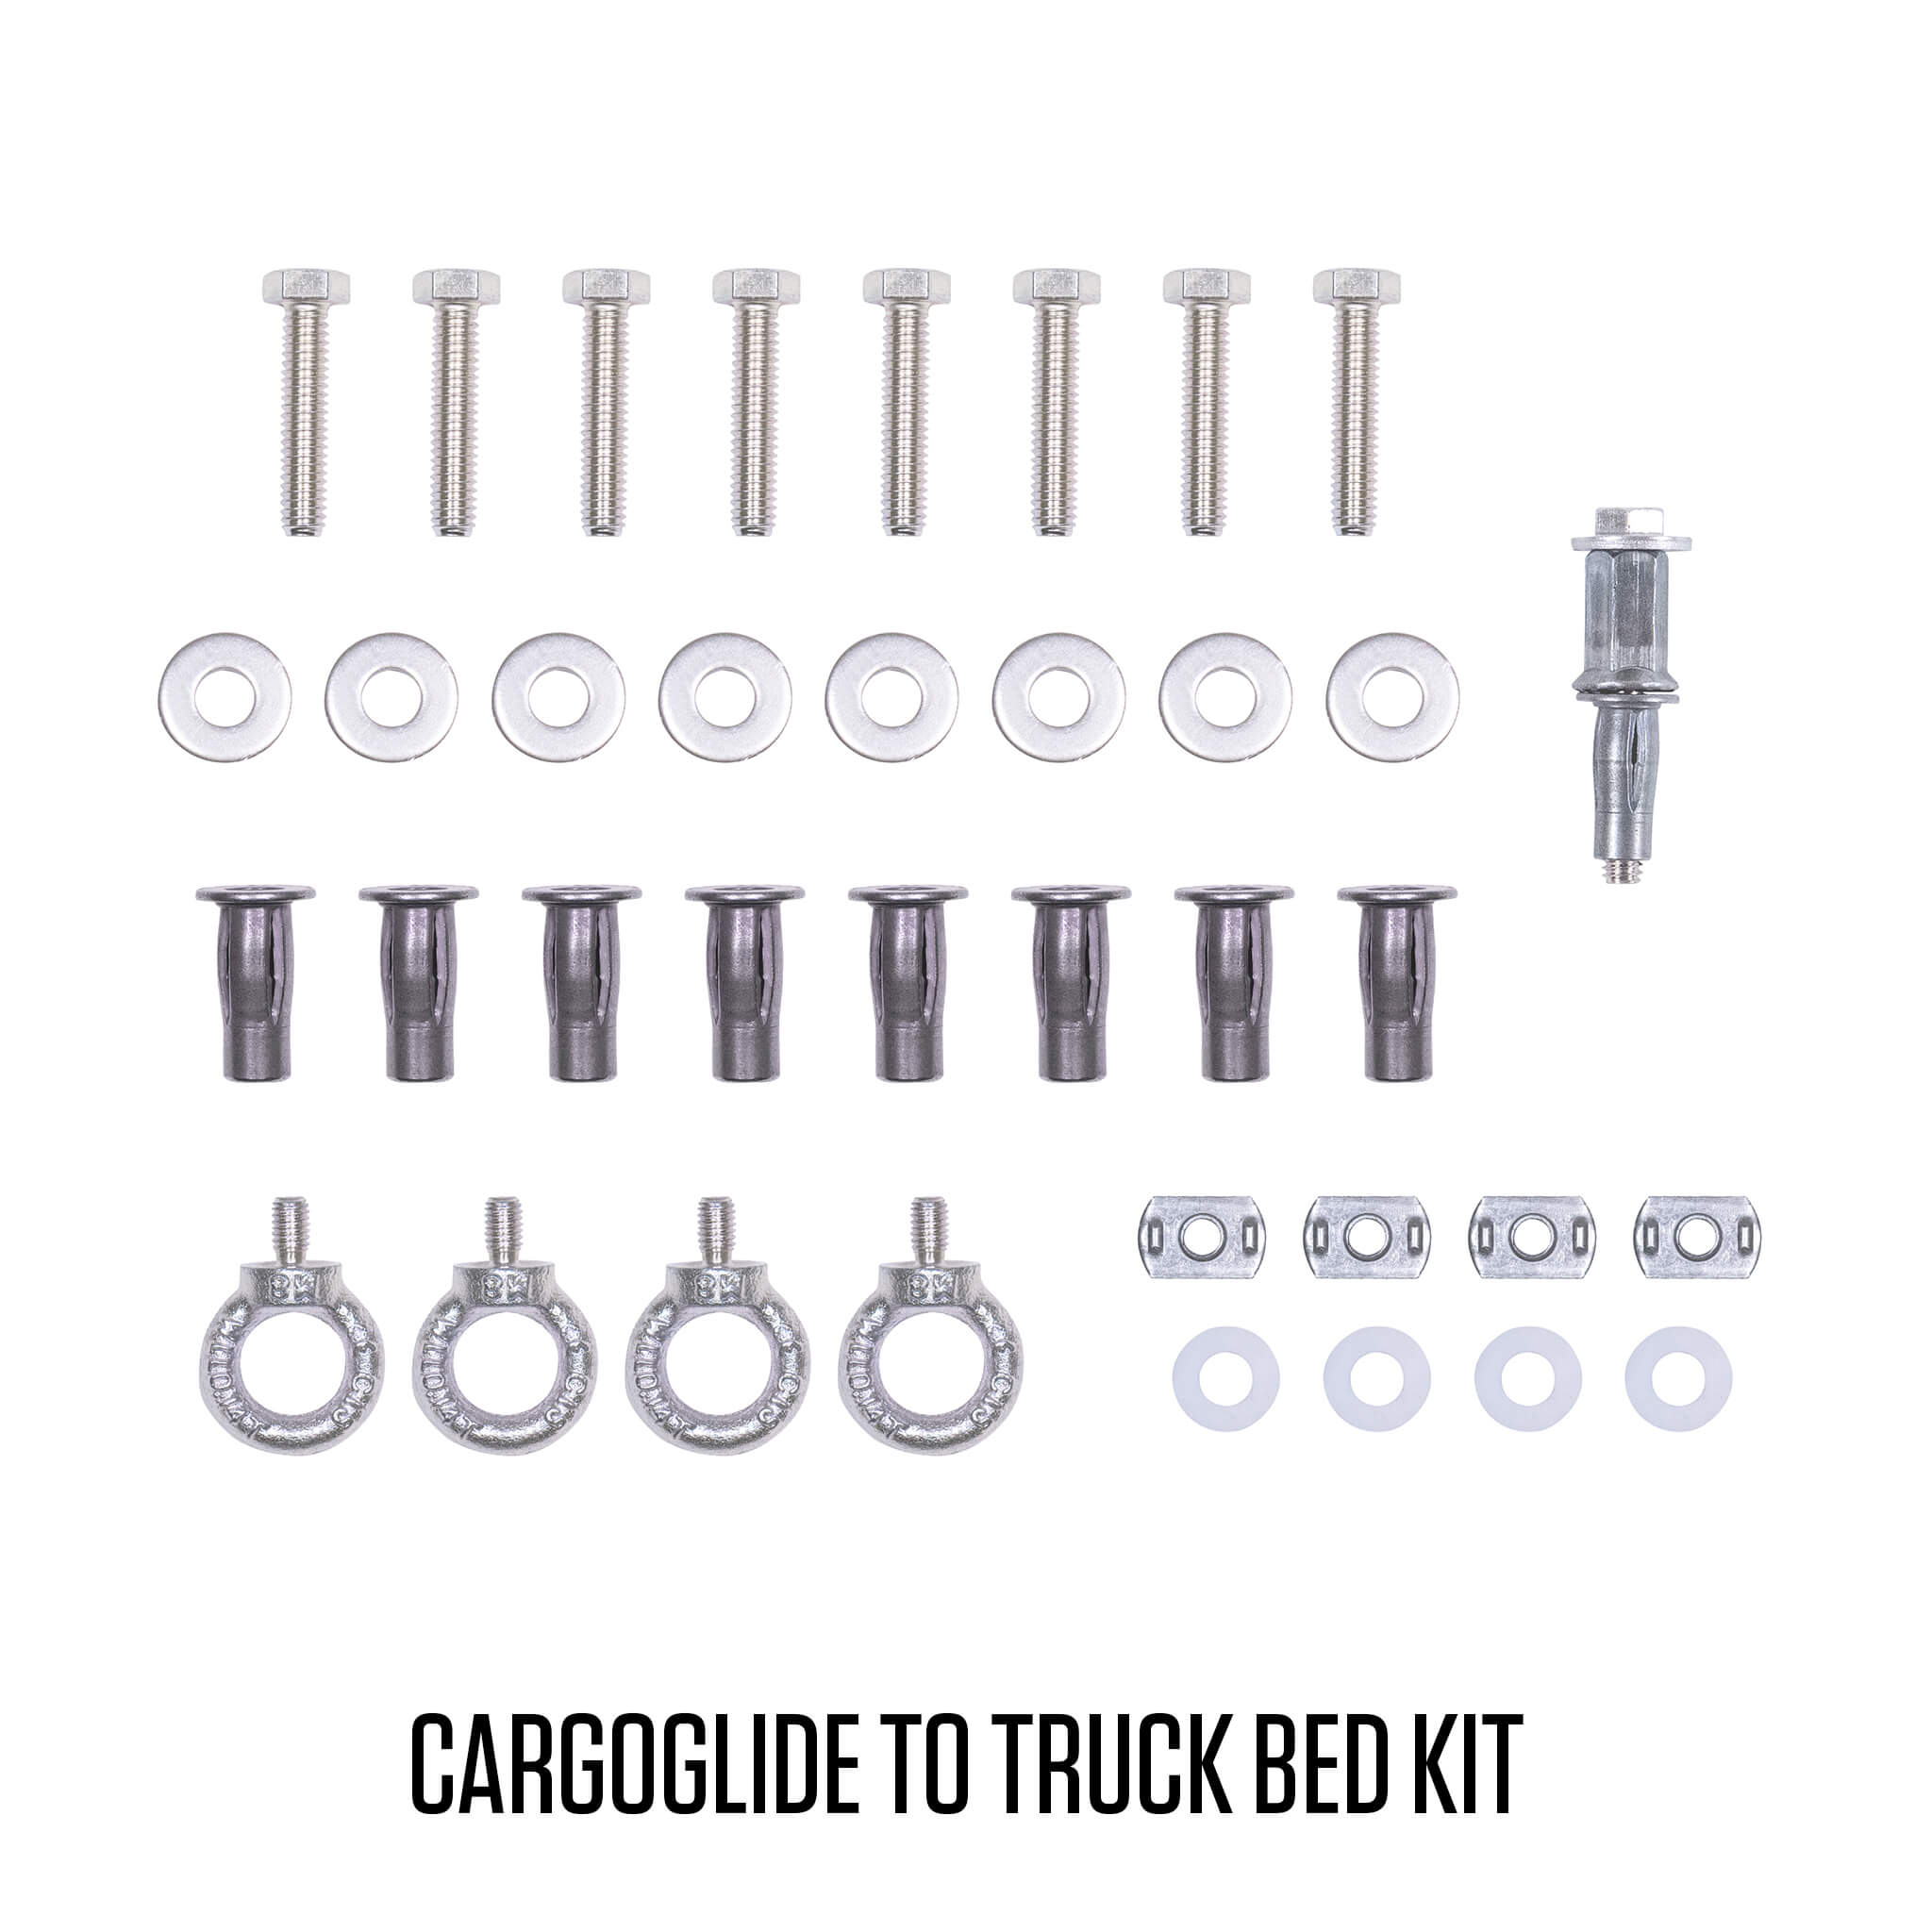 CargoGlide Installation Kits